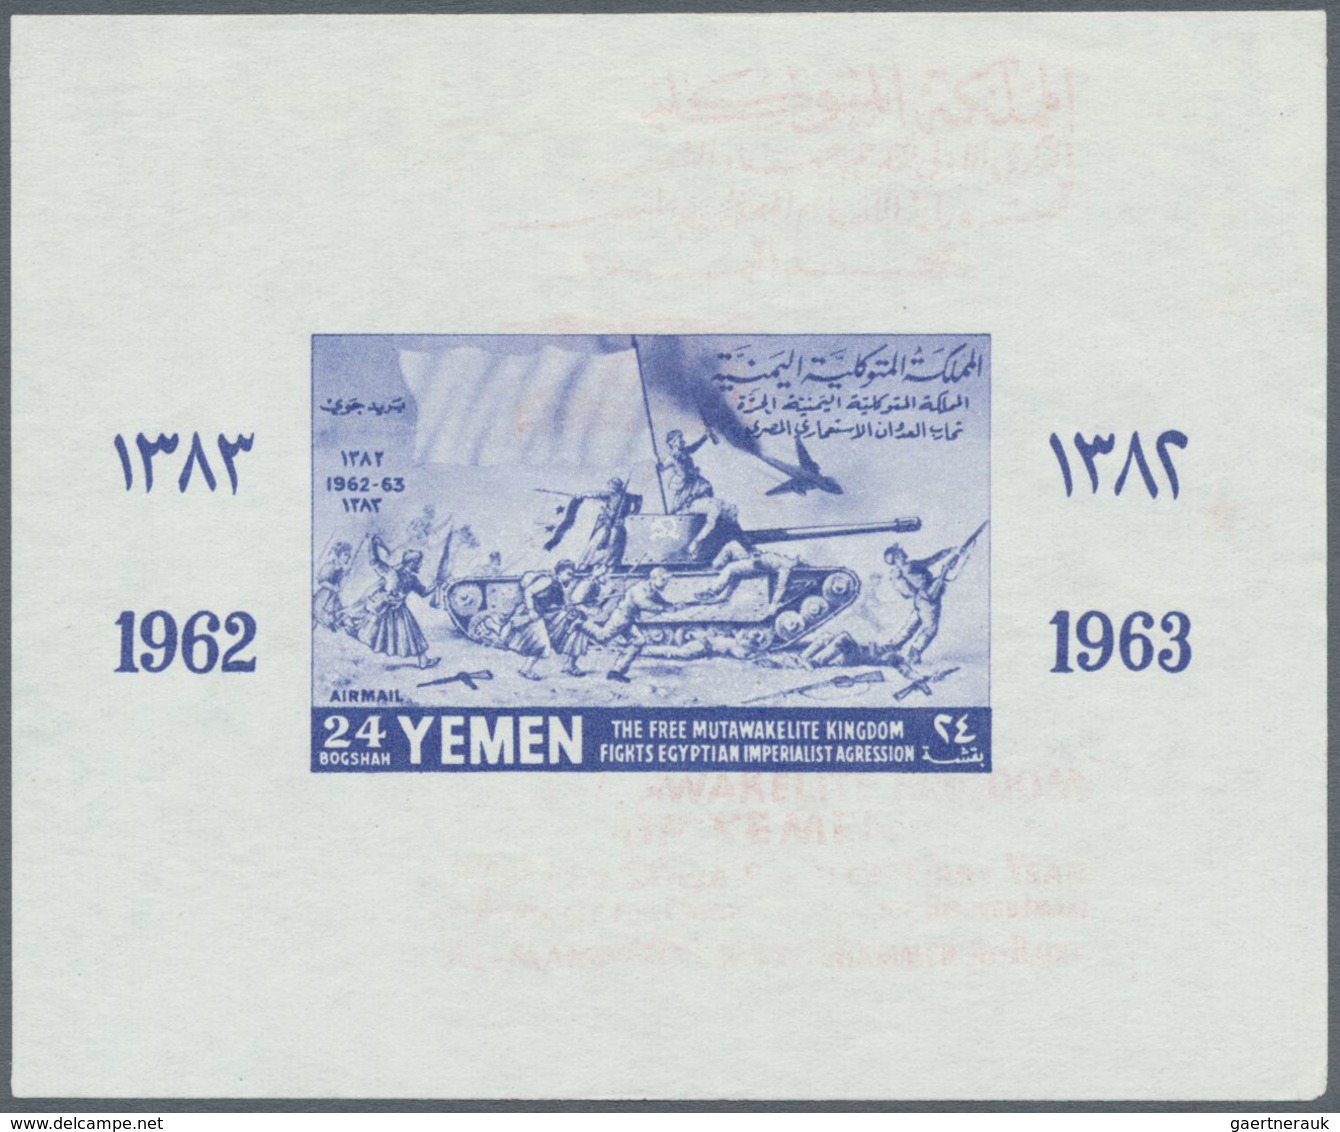 (*) Jemen - Königreich: 1964 'The Patriotic War': Three Souvenir Sheets With Overprint Varieties, One Wi - Yemen